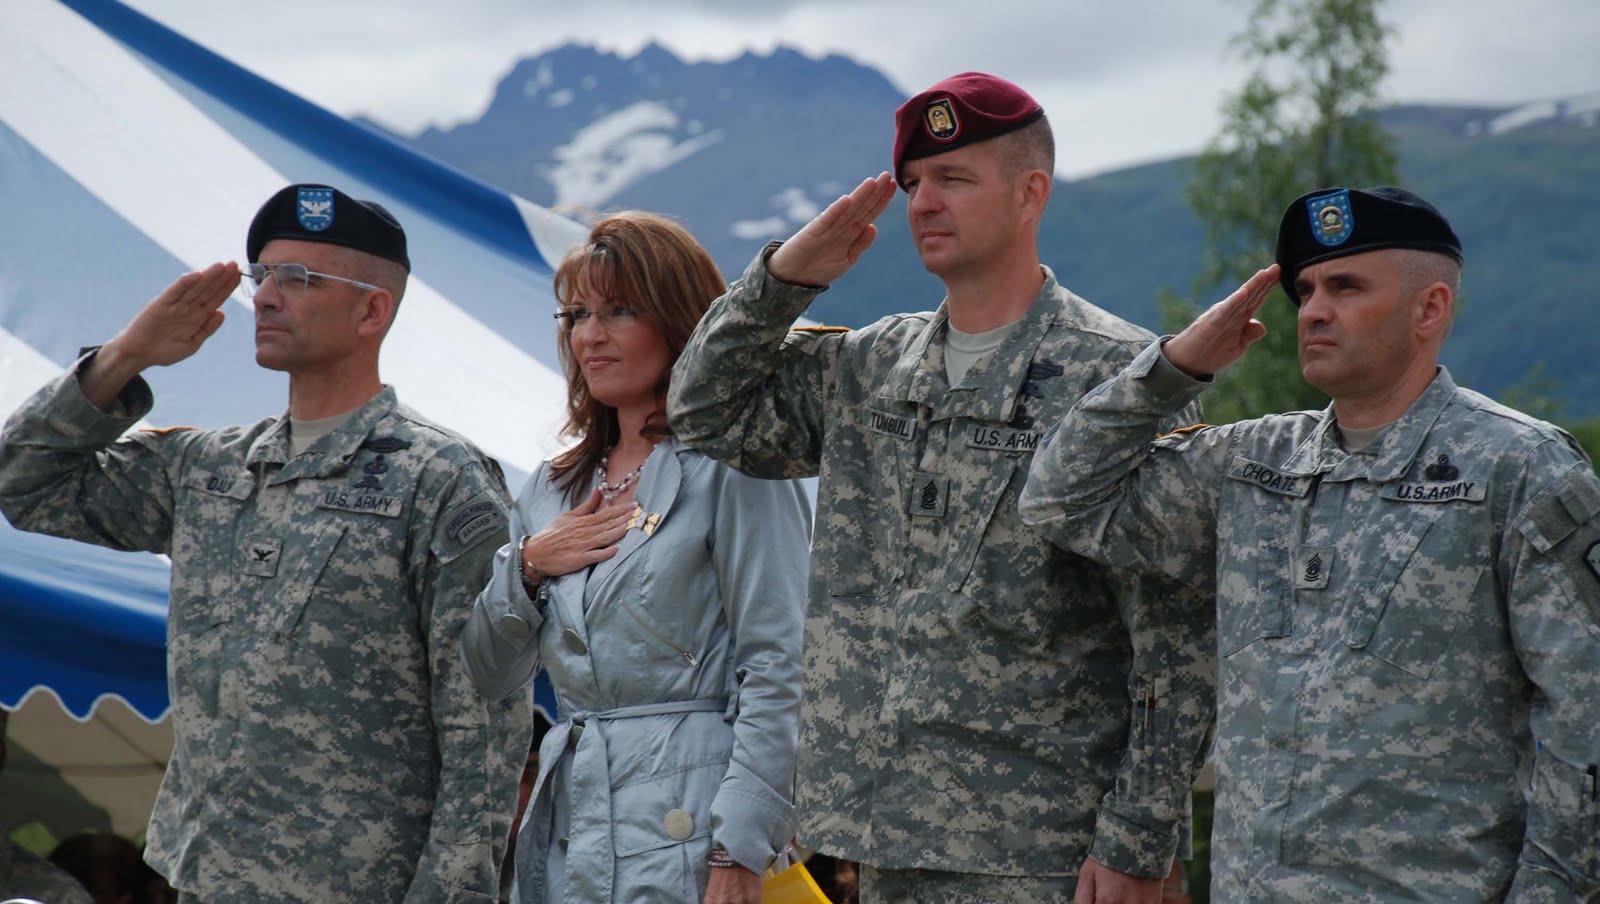 Sarah+Palin+With+Military+Saluting+At+911+Memorial.jpg